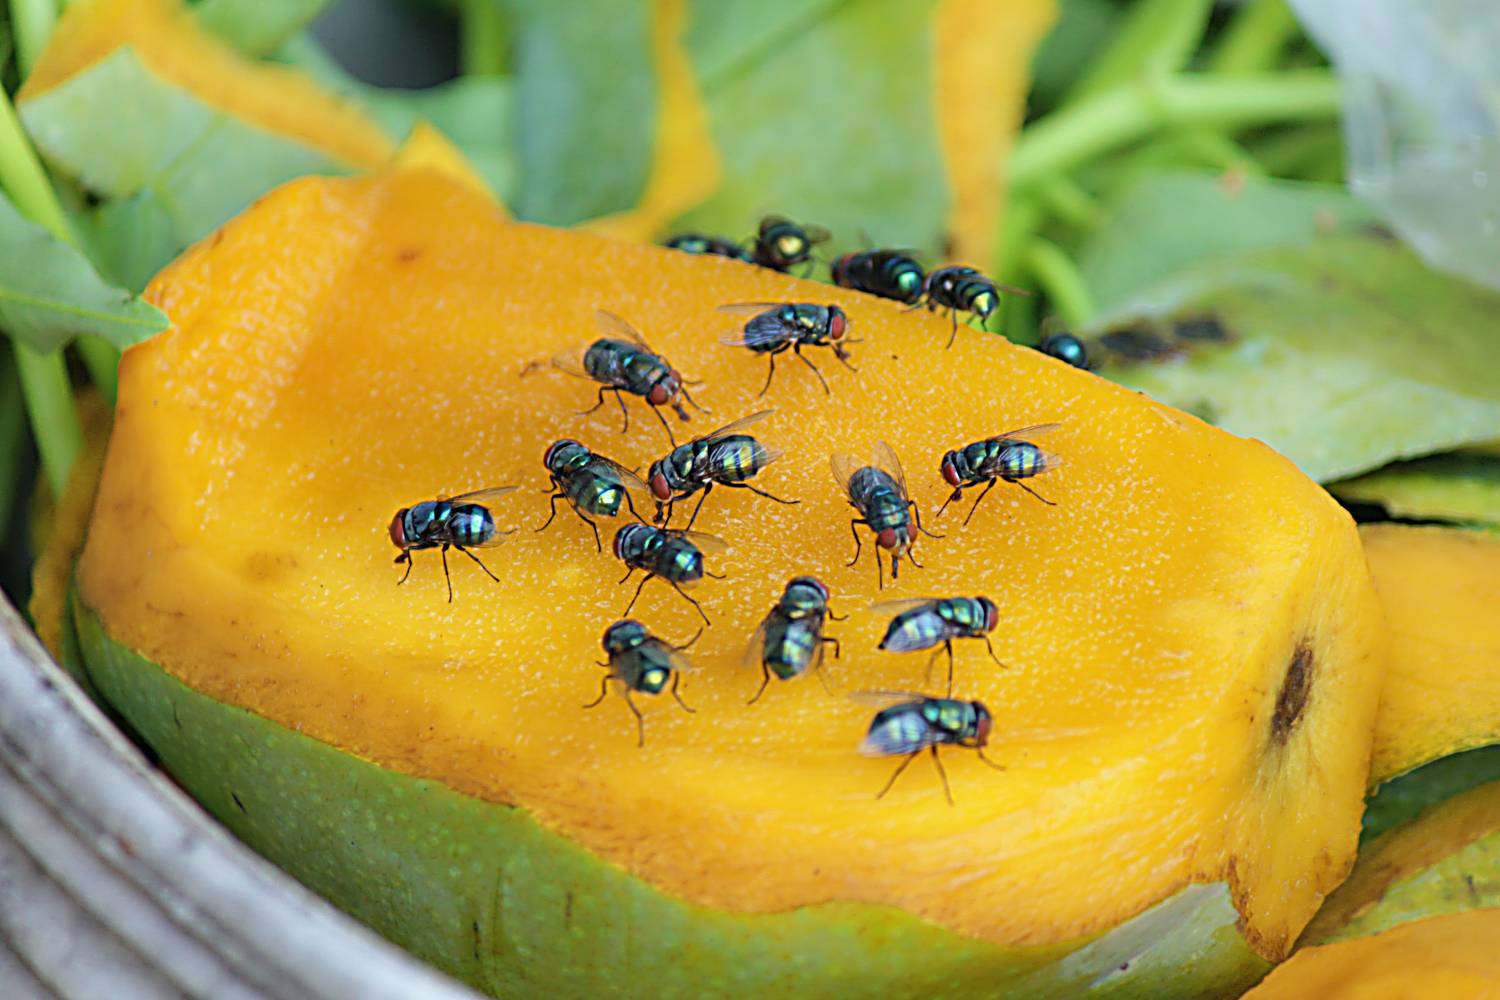 Flies on fruit